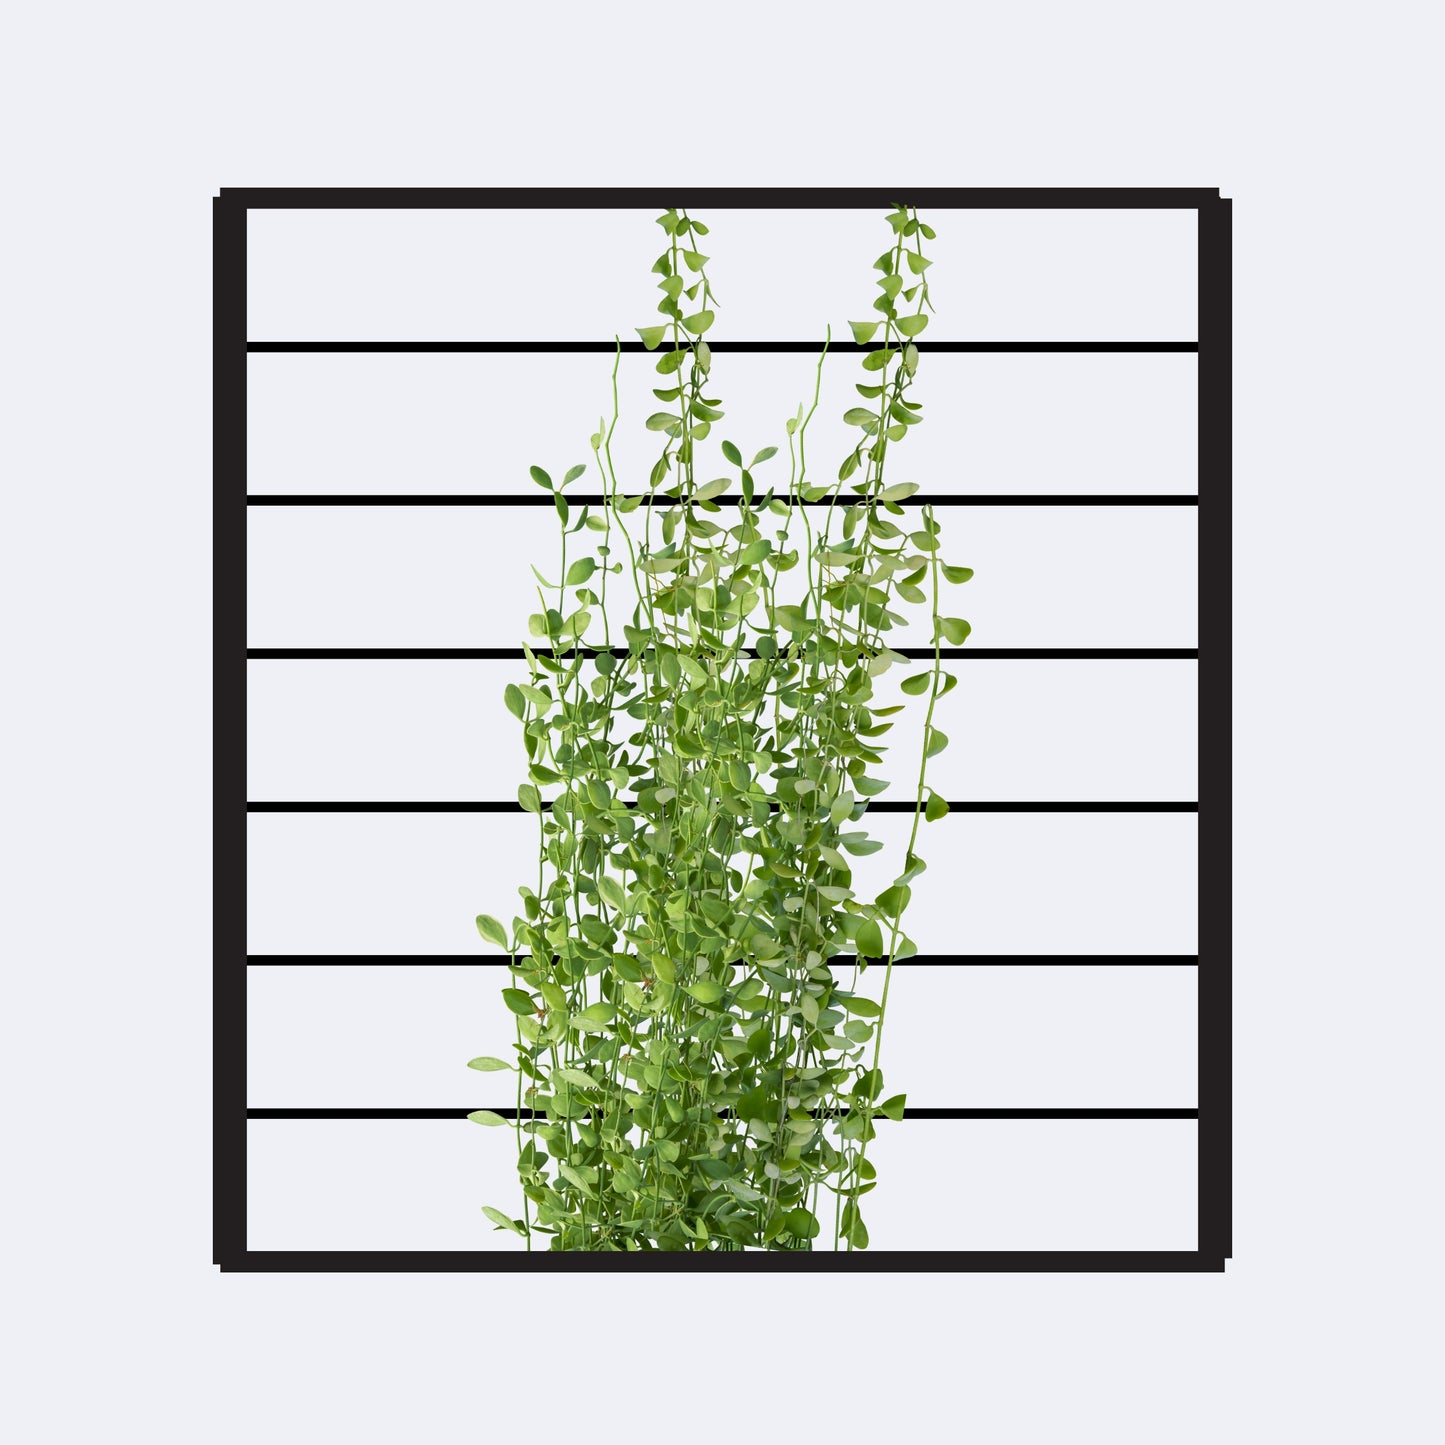 horizontal trellis for climbing plants -s2n